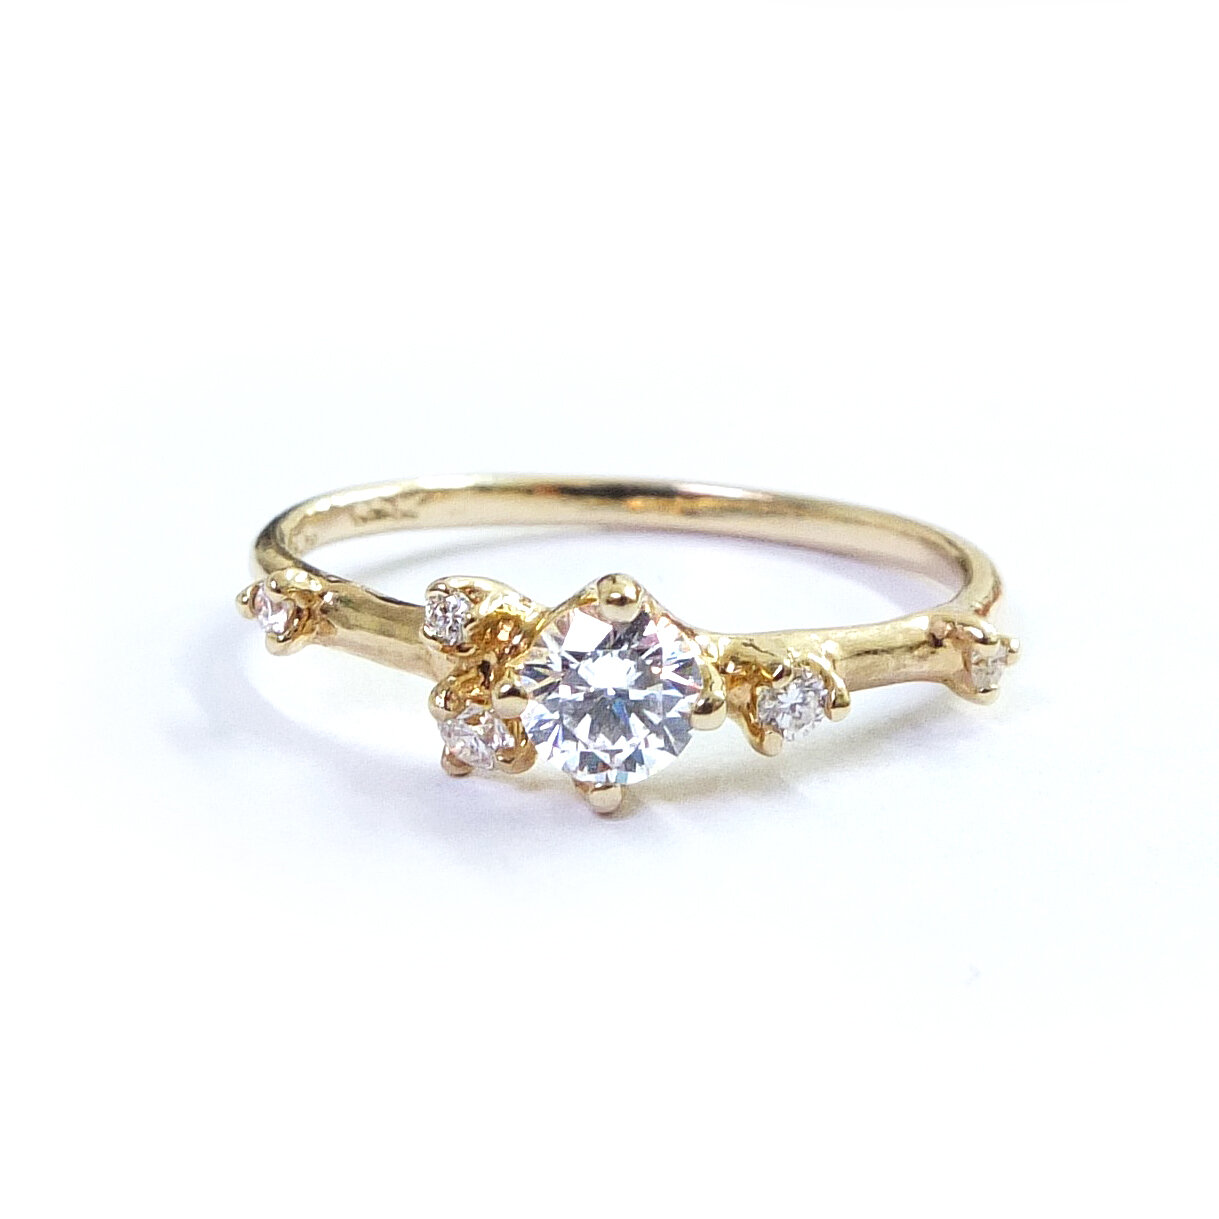 Princess Crown Ring Set of 2 - LilyFair Jewelry